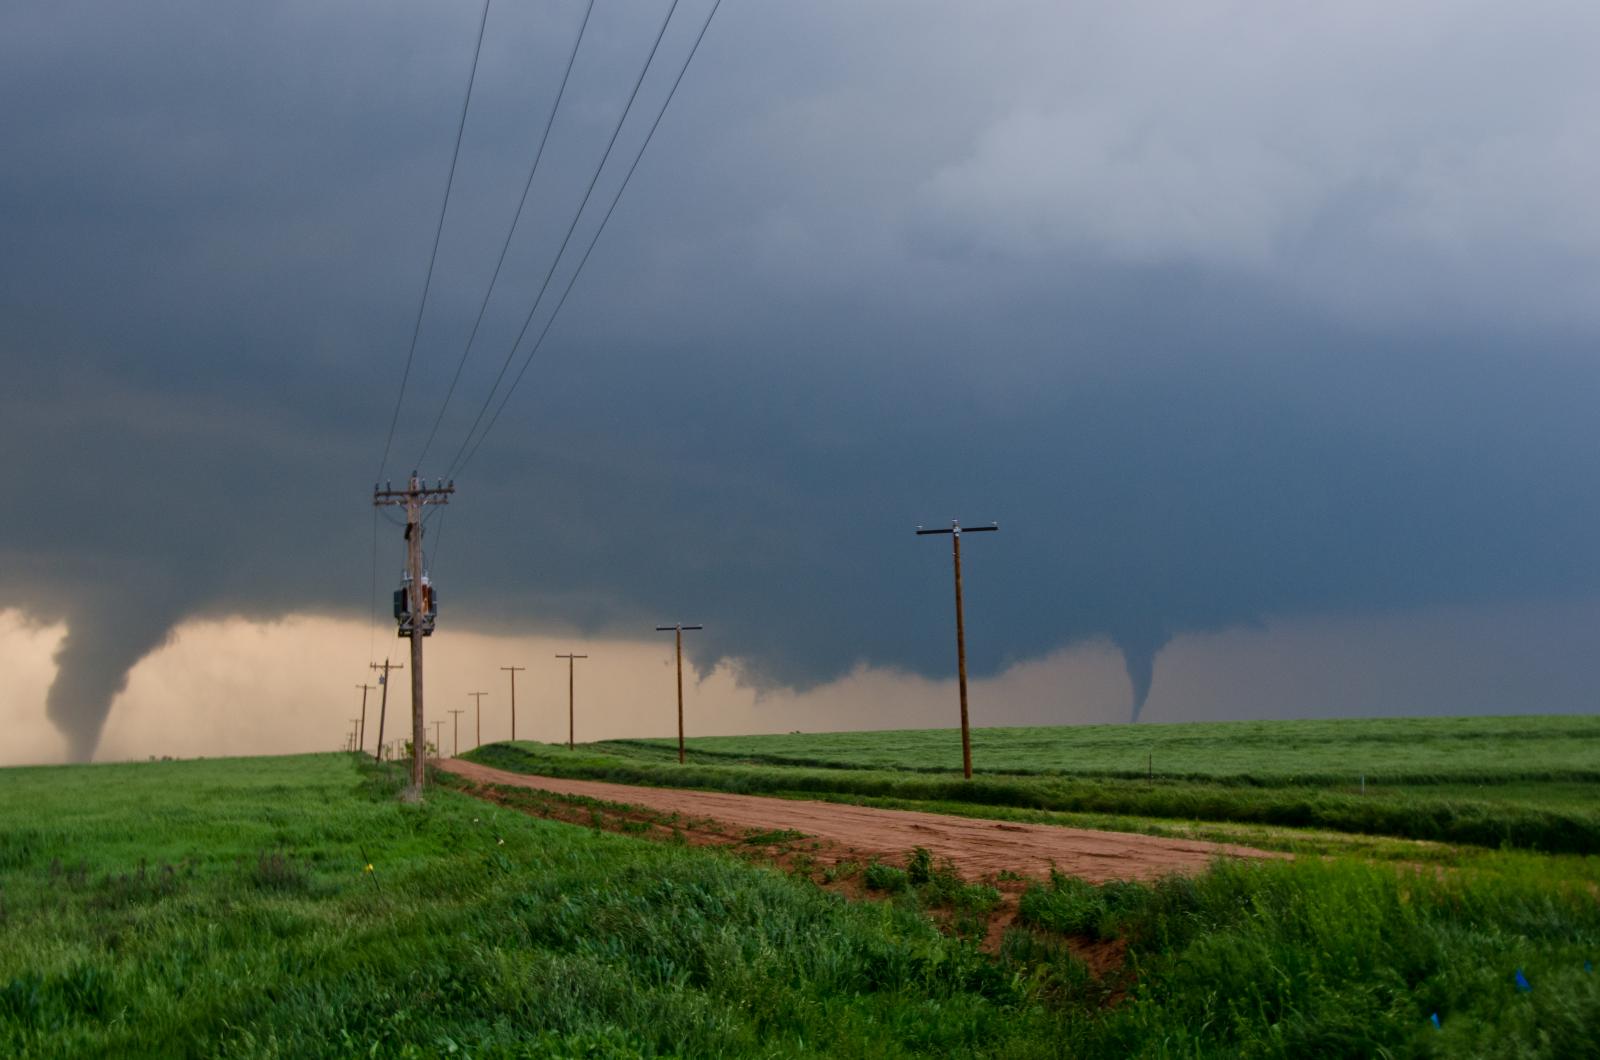 Dual Tornadoes near Cherokee, OK on April 14, 2012